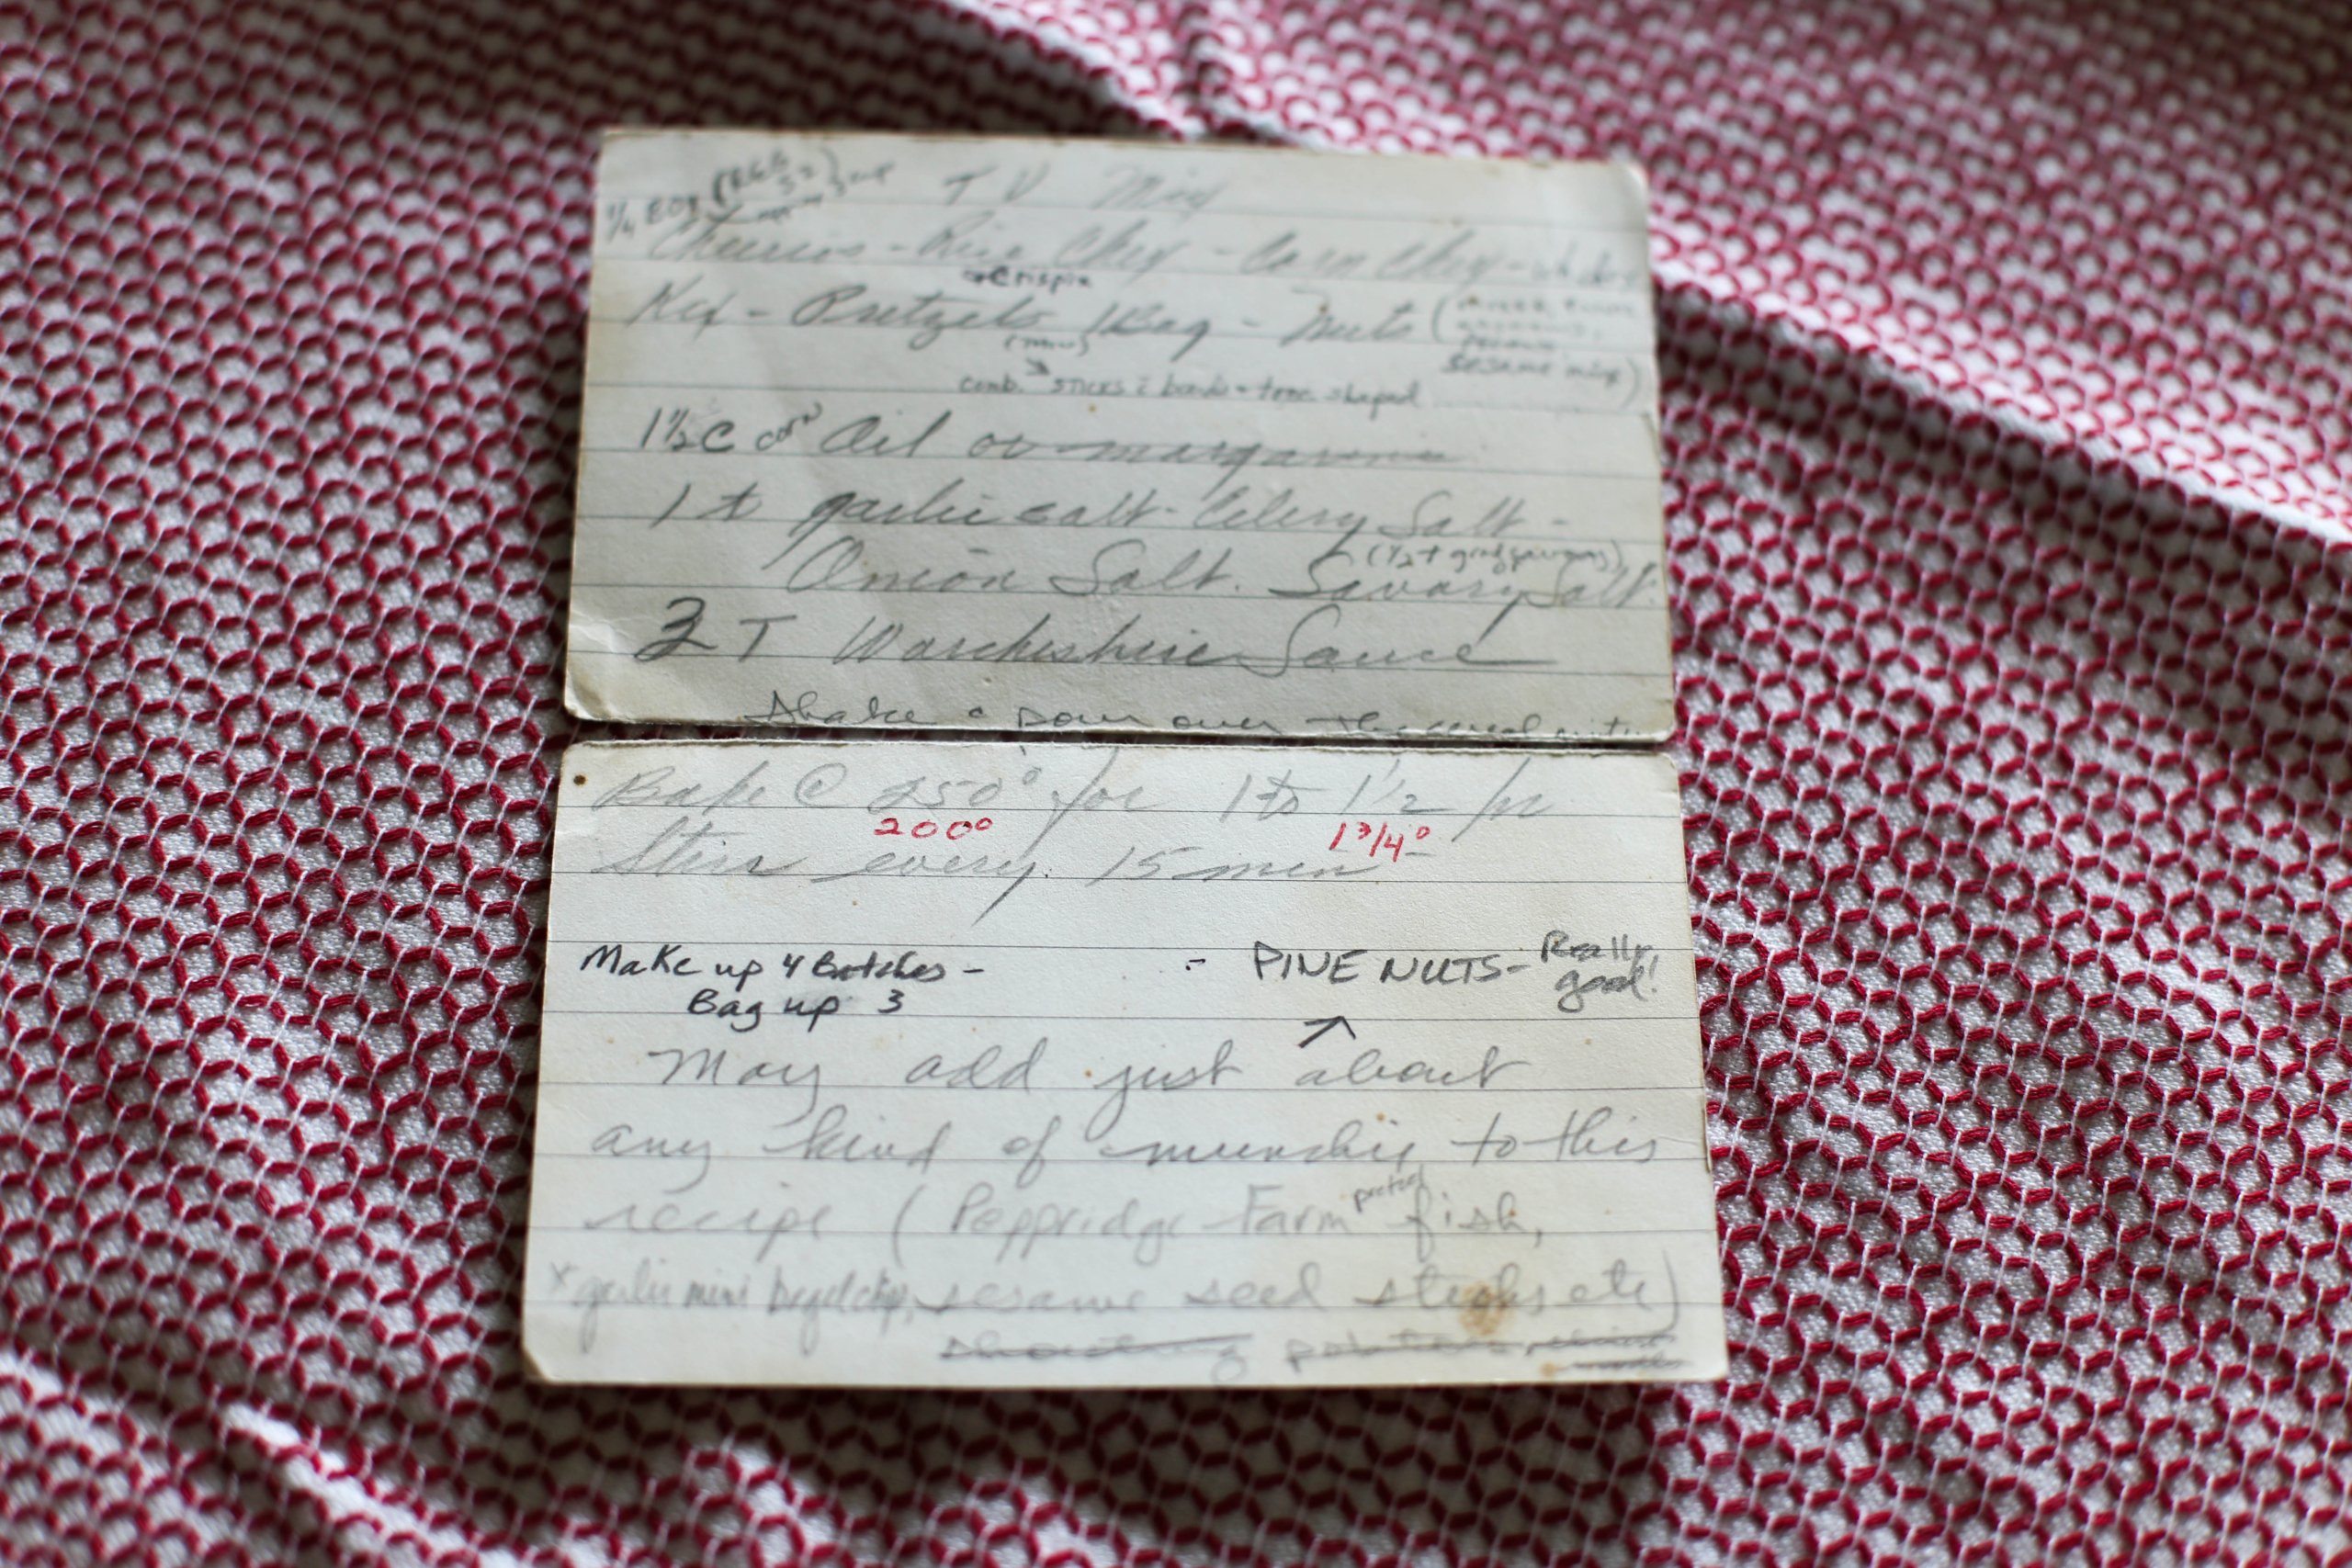 Grandma's recipe for homemade chex mix handwritten on notecards.